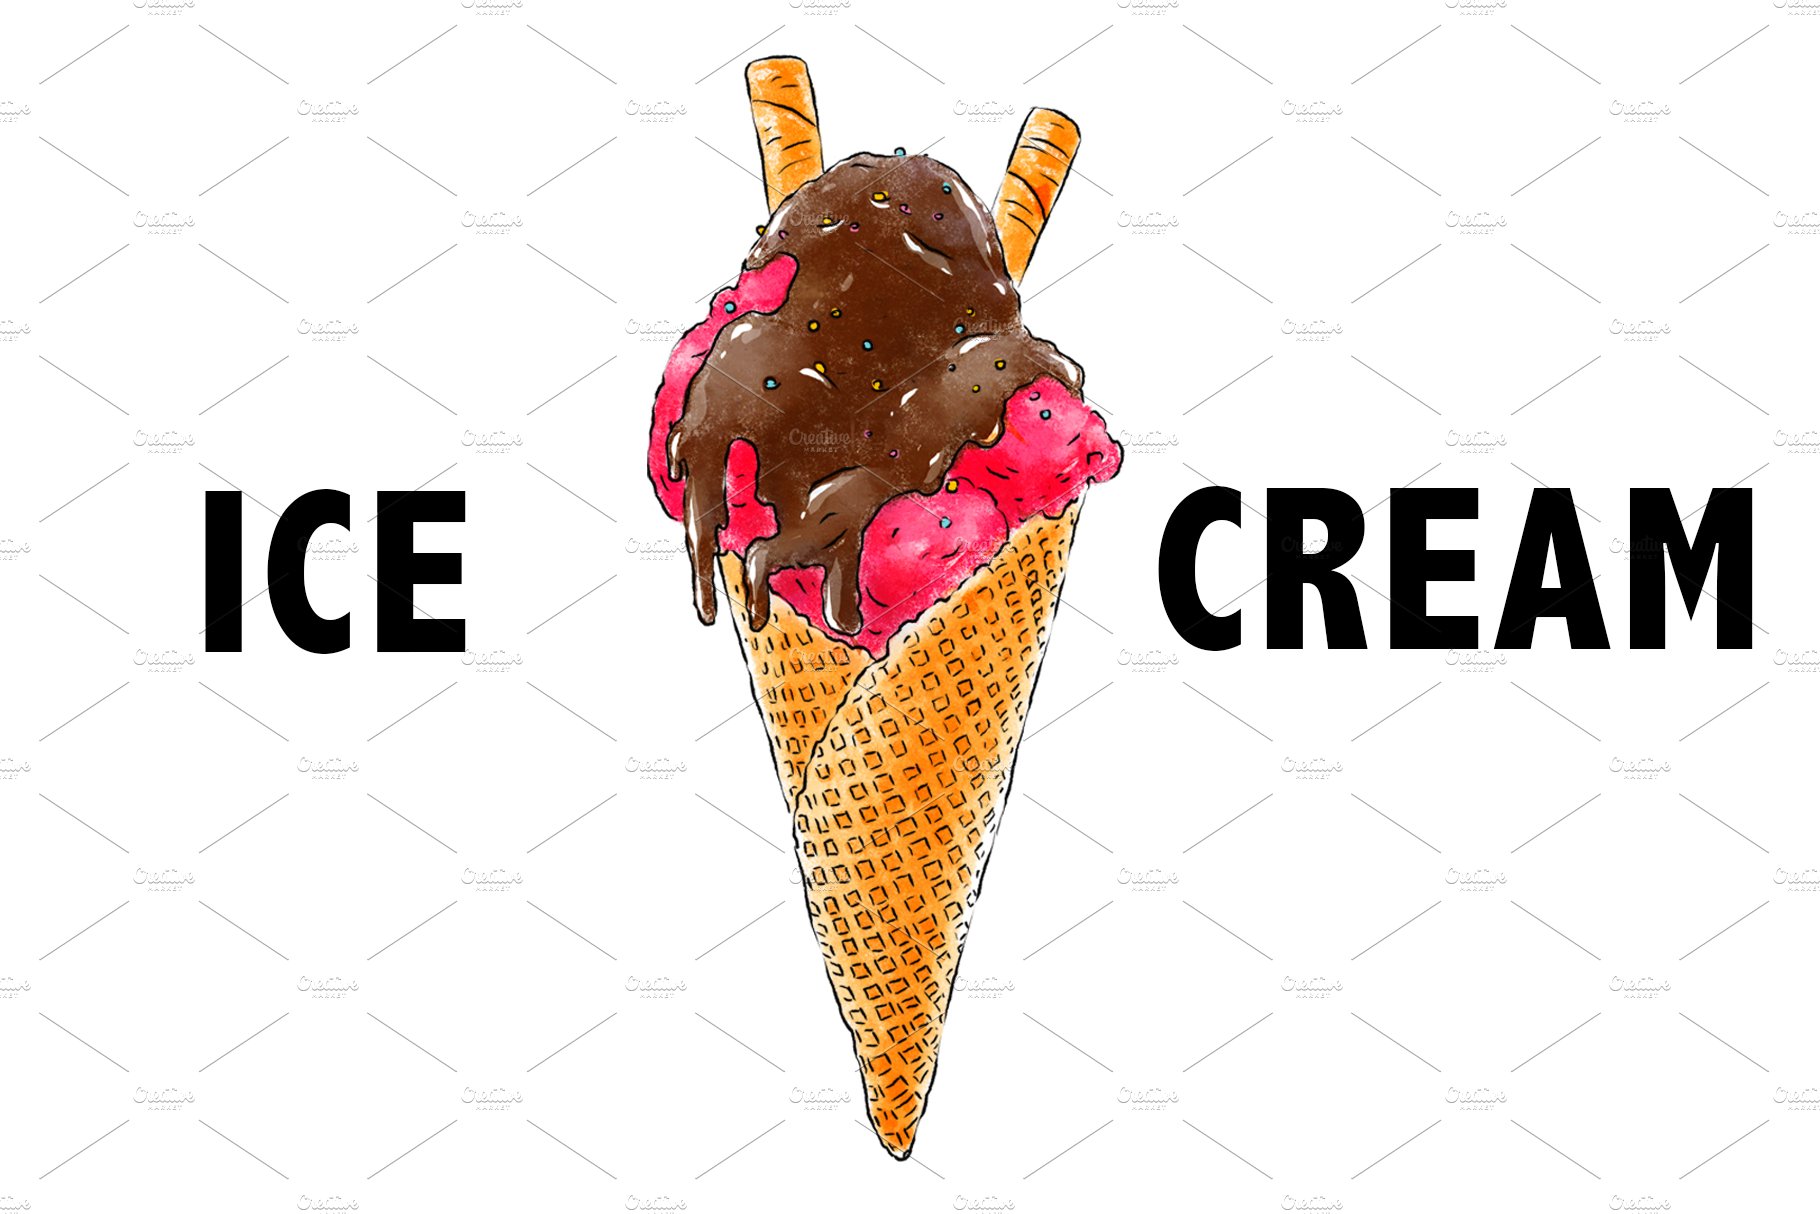 Hand-drawn Ice cream cover image.